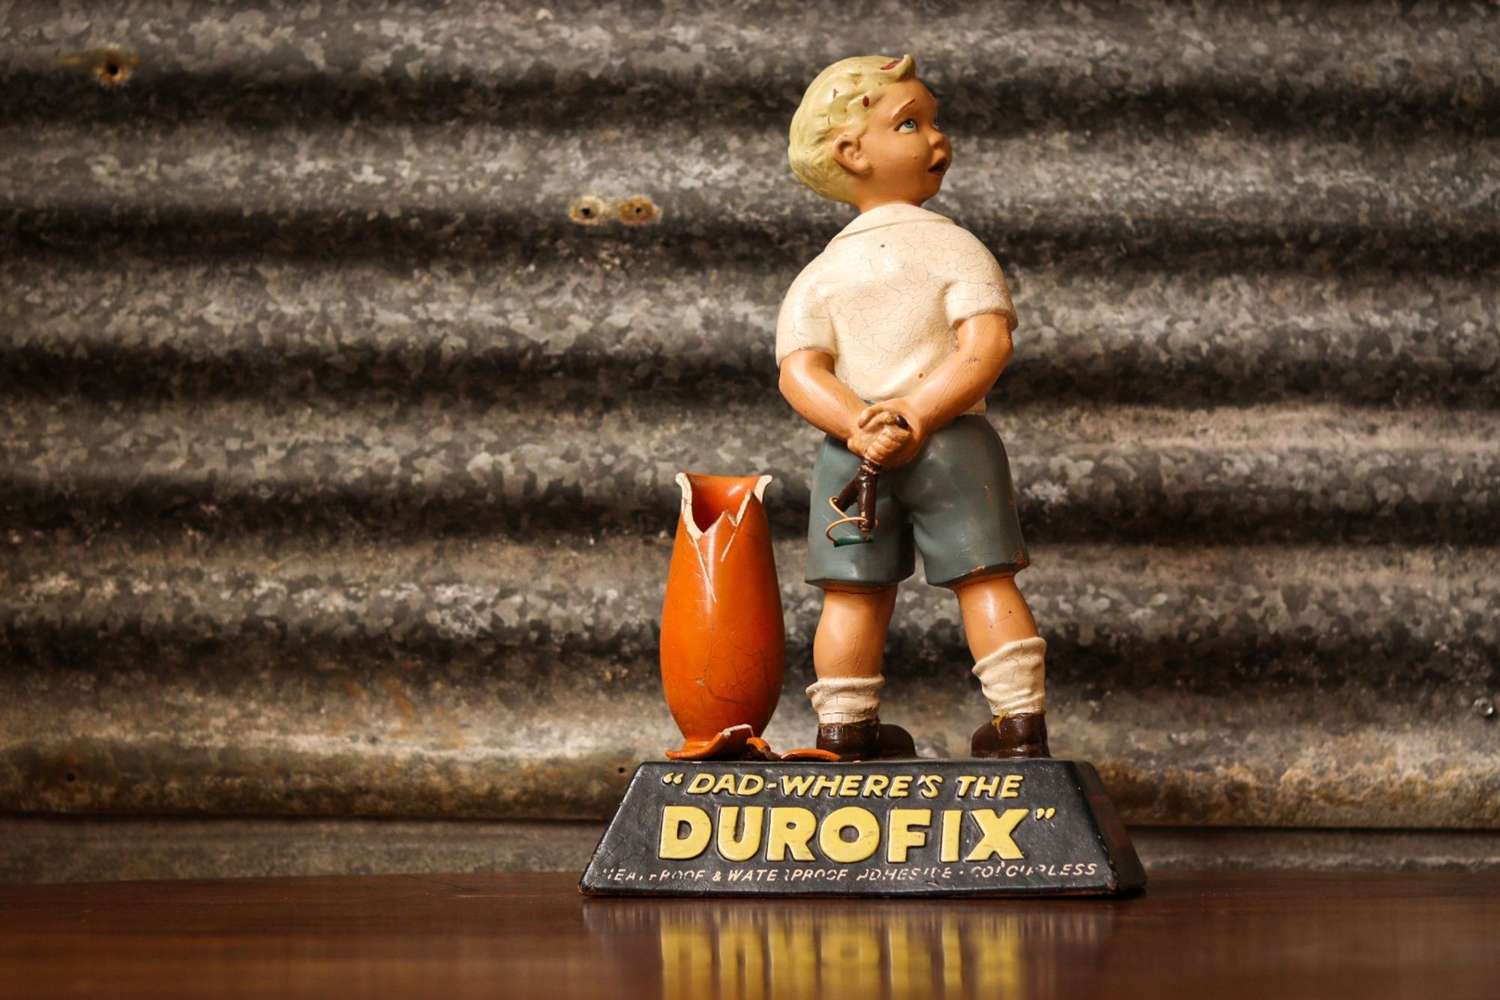 Cute Advertising Figure Of The Durofix Boy